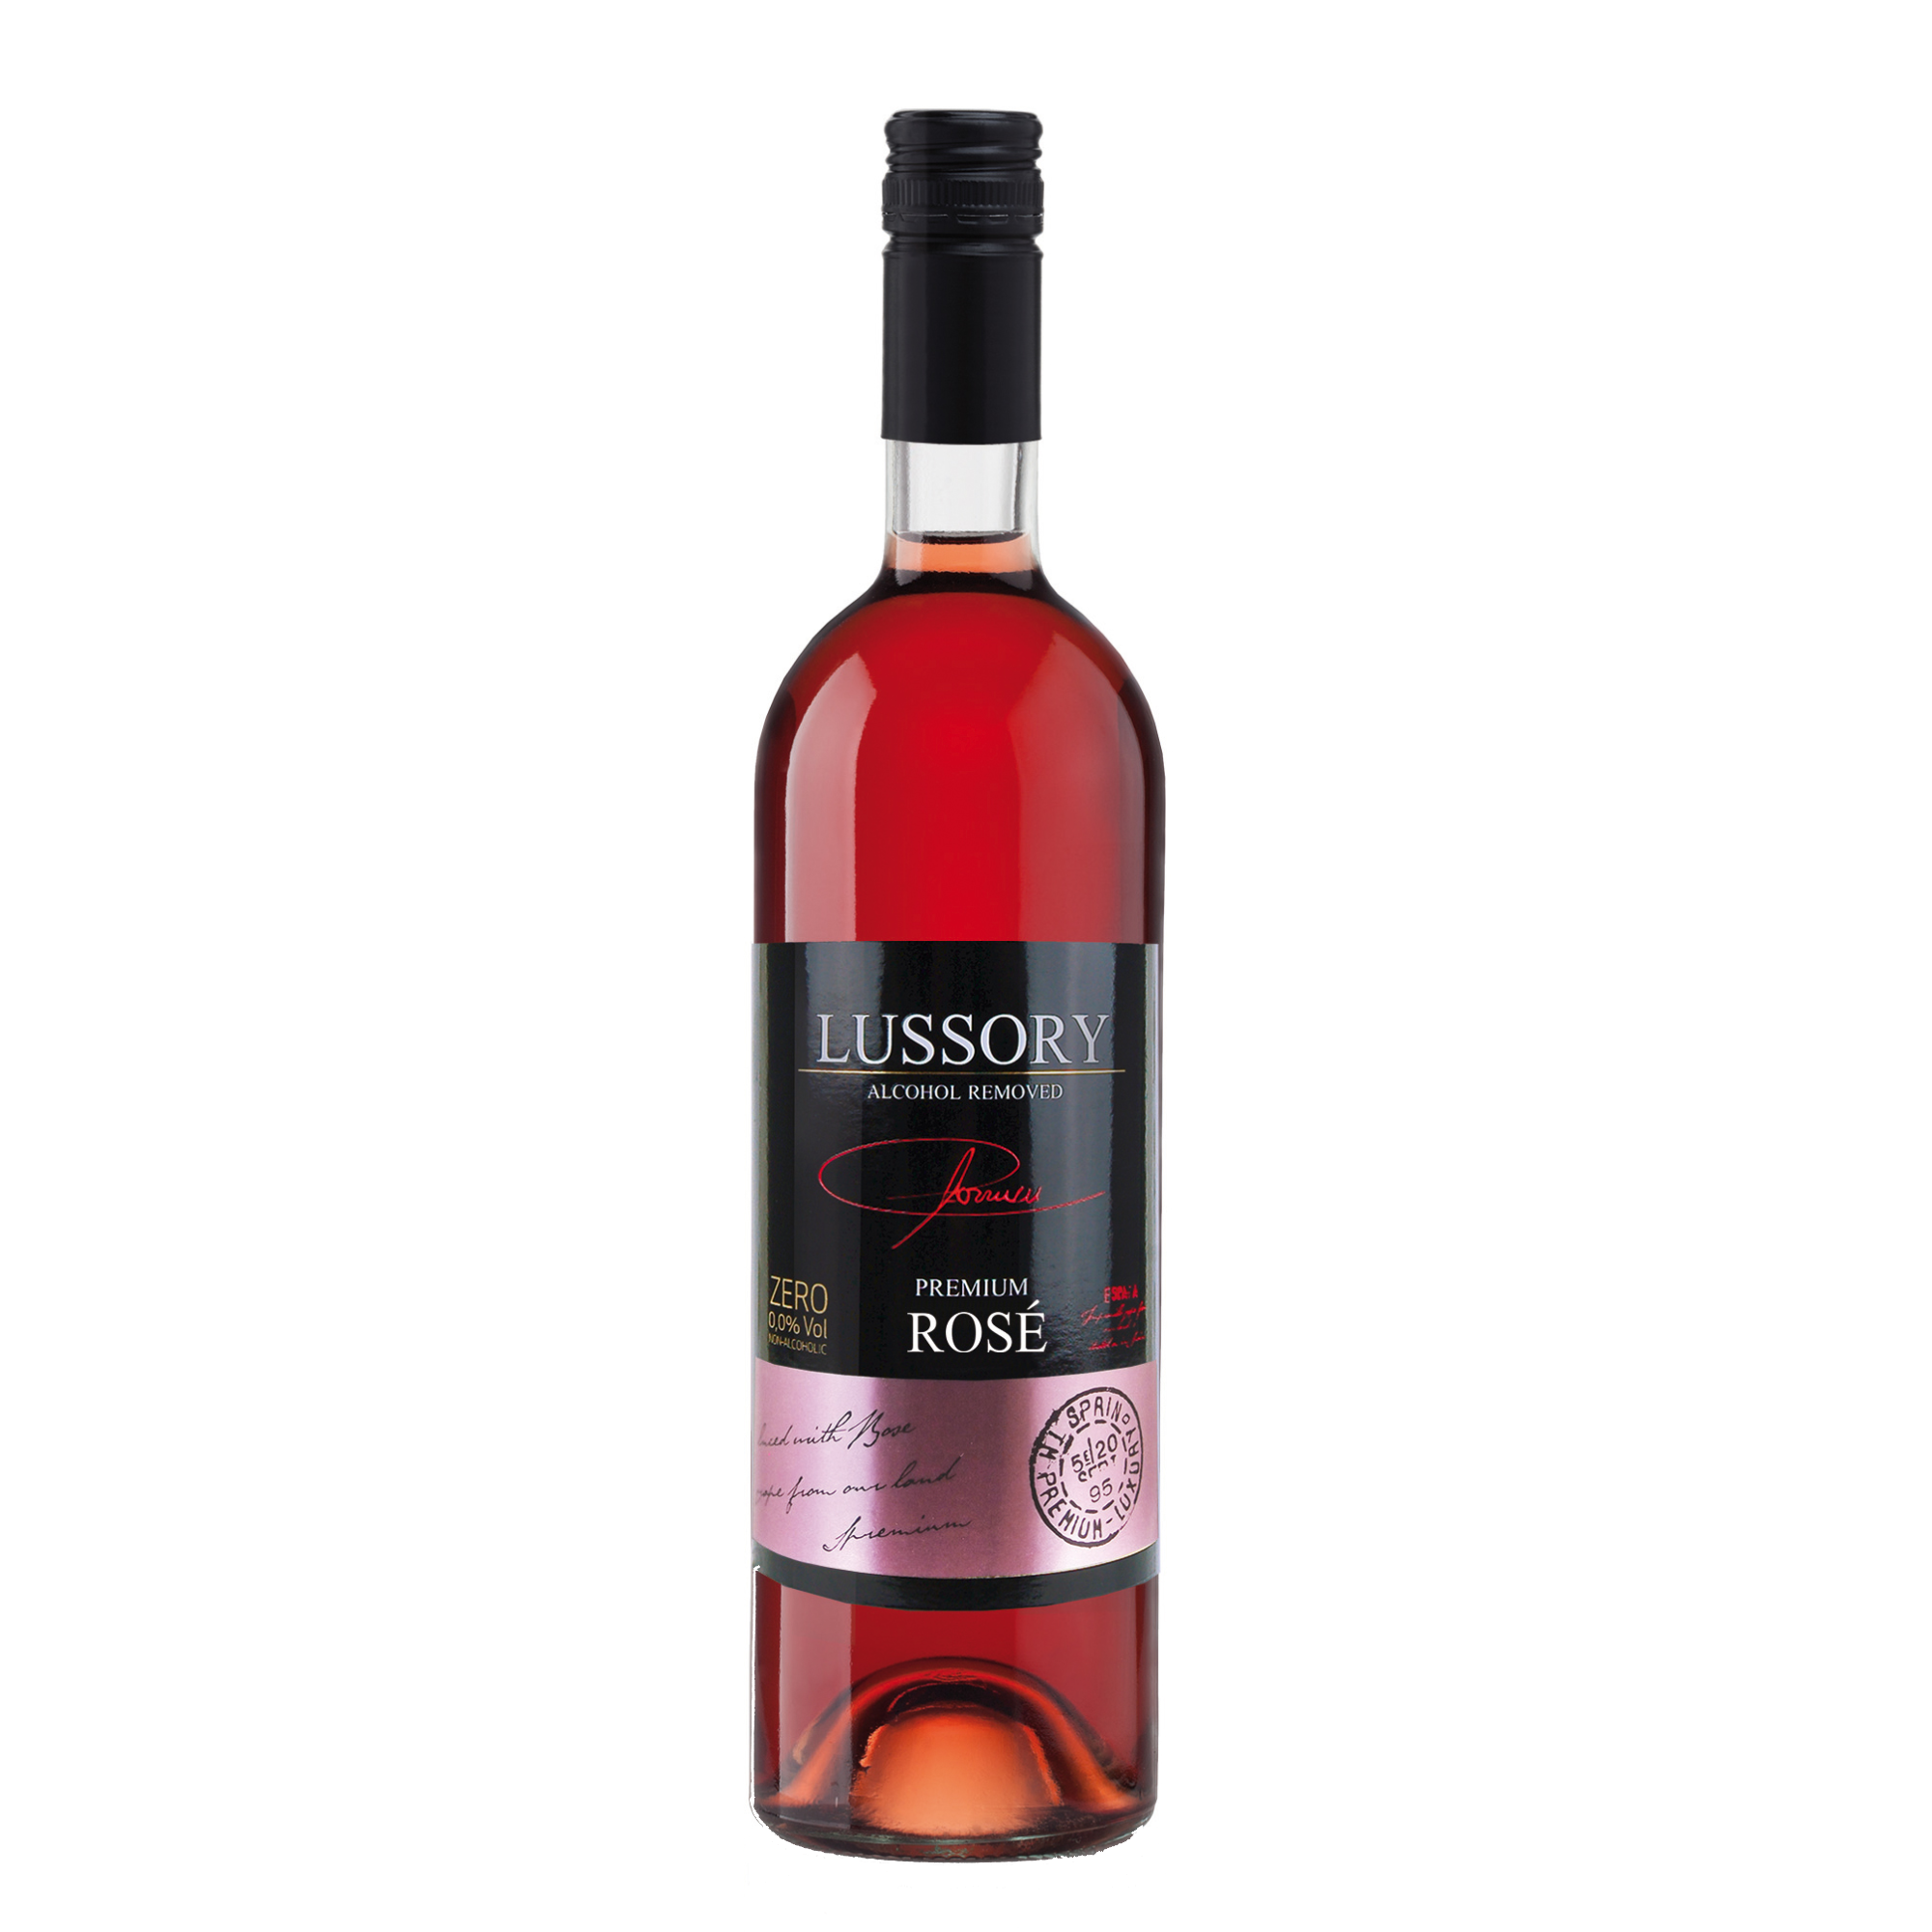 Lussory rose alcohol-free wine